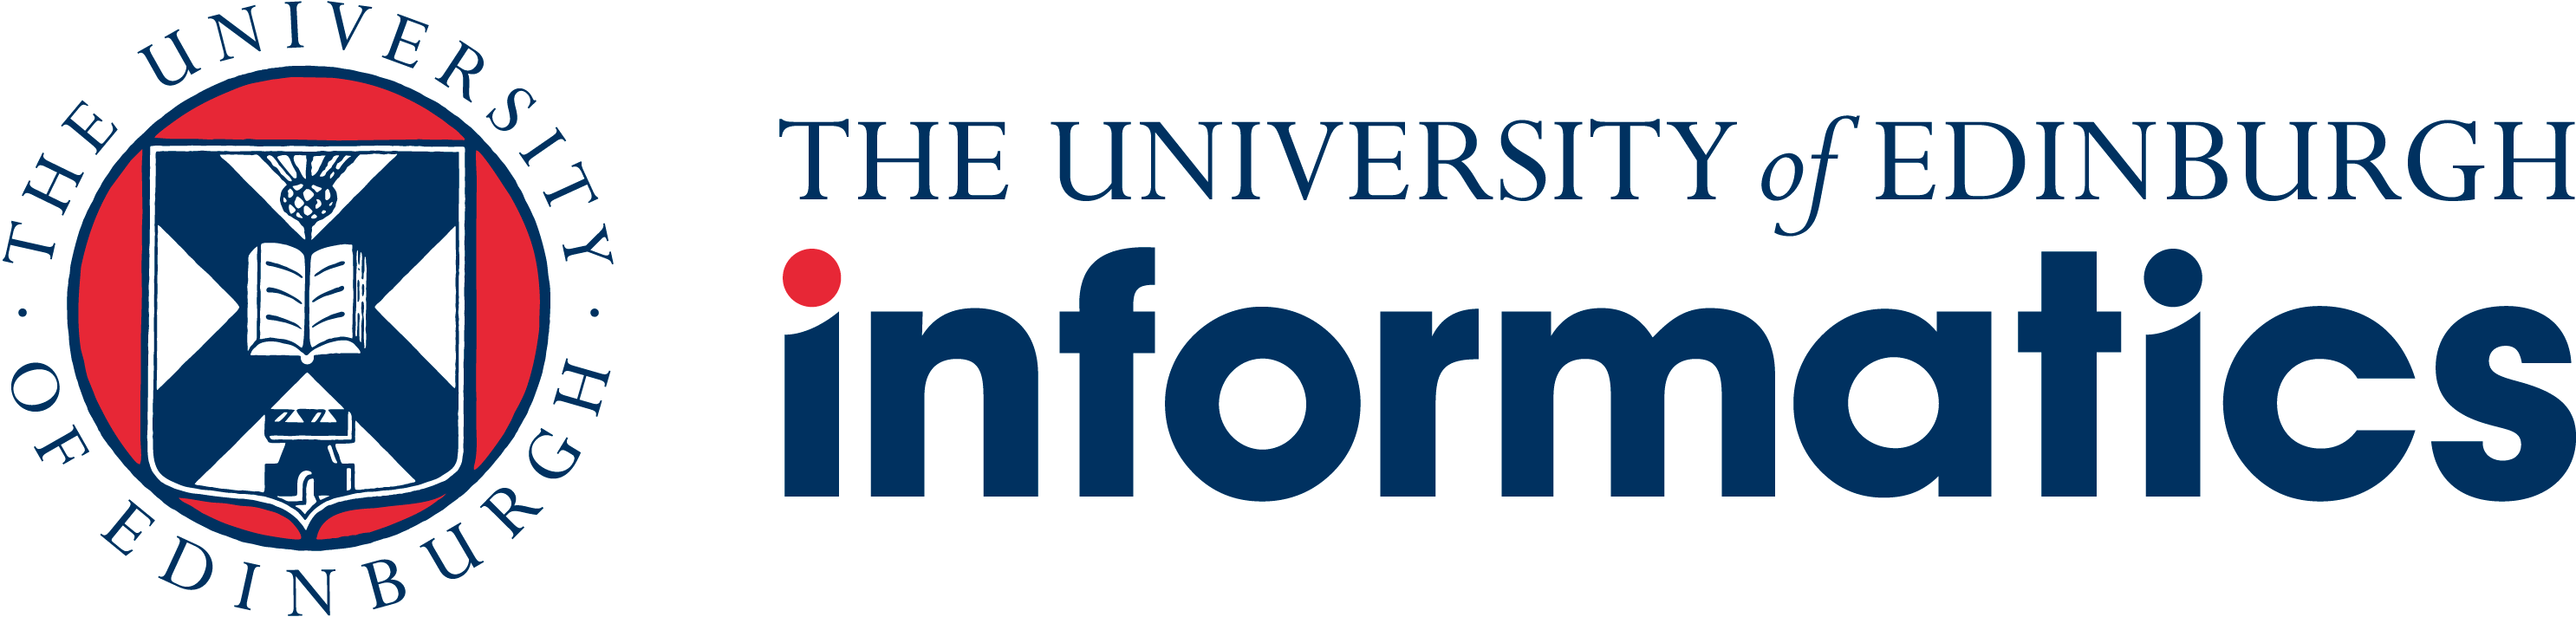 School of Informatics logo 